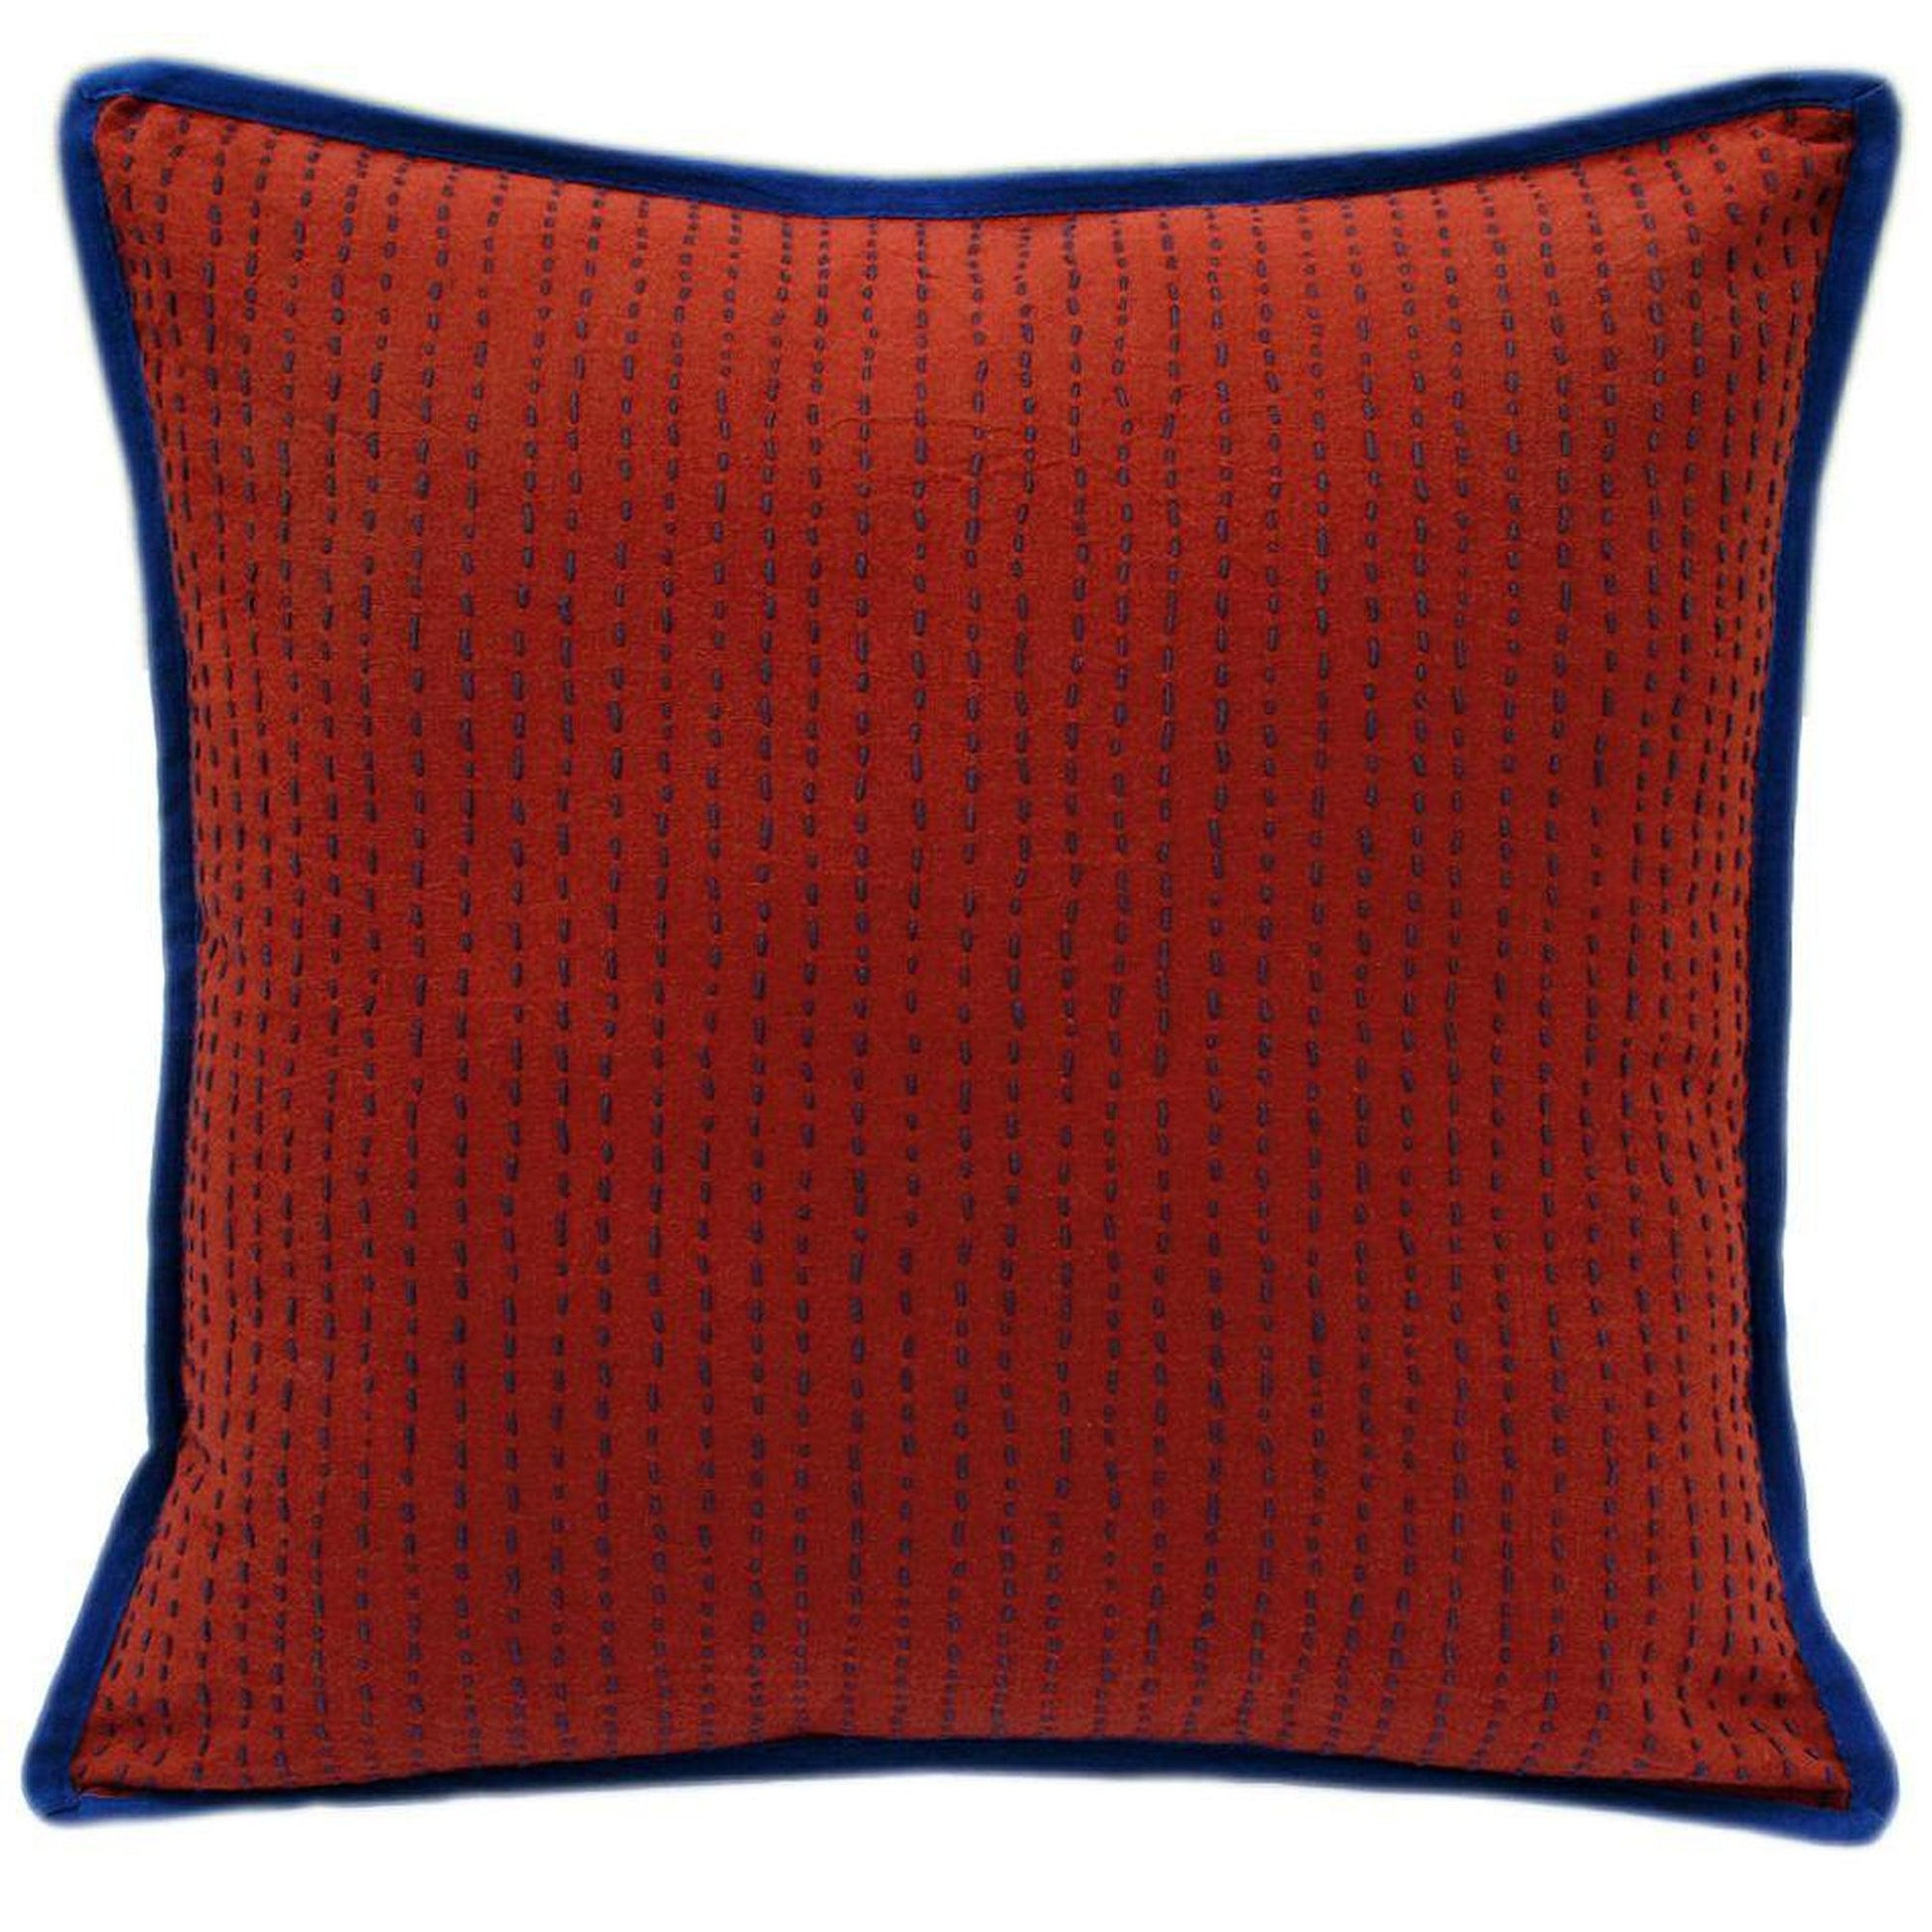 16" Red Kantha Cushion Cover - The Teal Thread